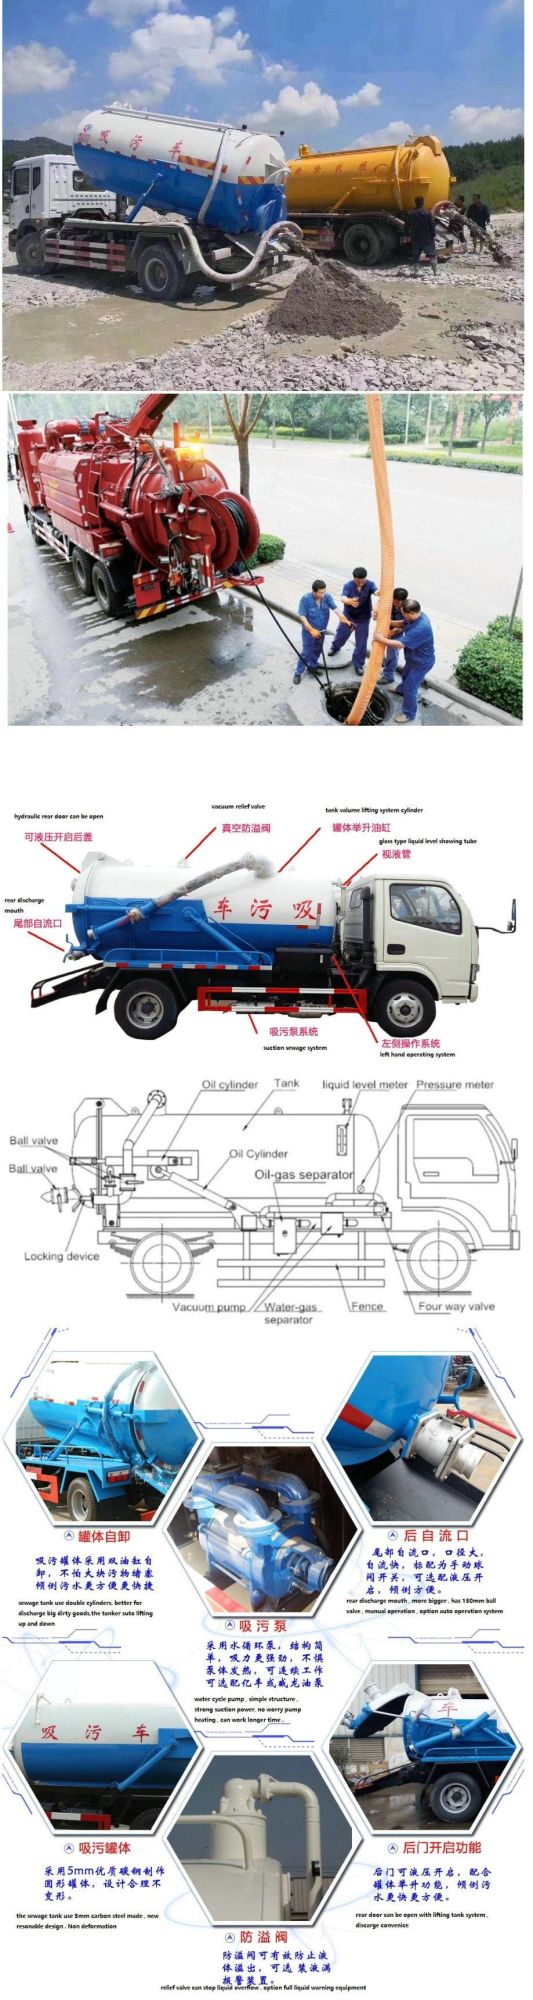 Suzu 4000L~8, 000L Vacuum Sucion Tanker Truck Sale (Cesspit Emptier Tank With VAC Pump)